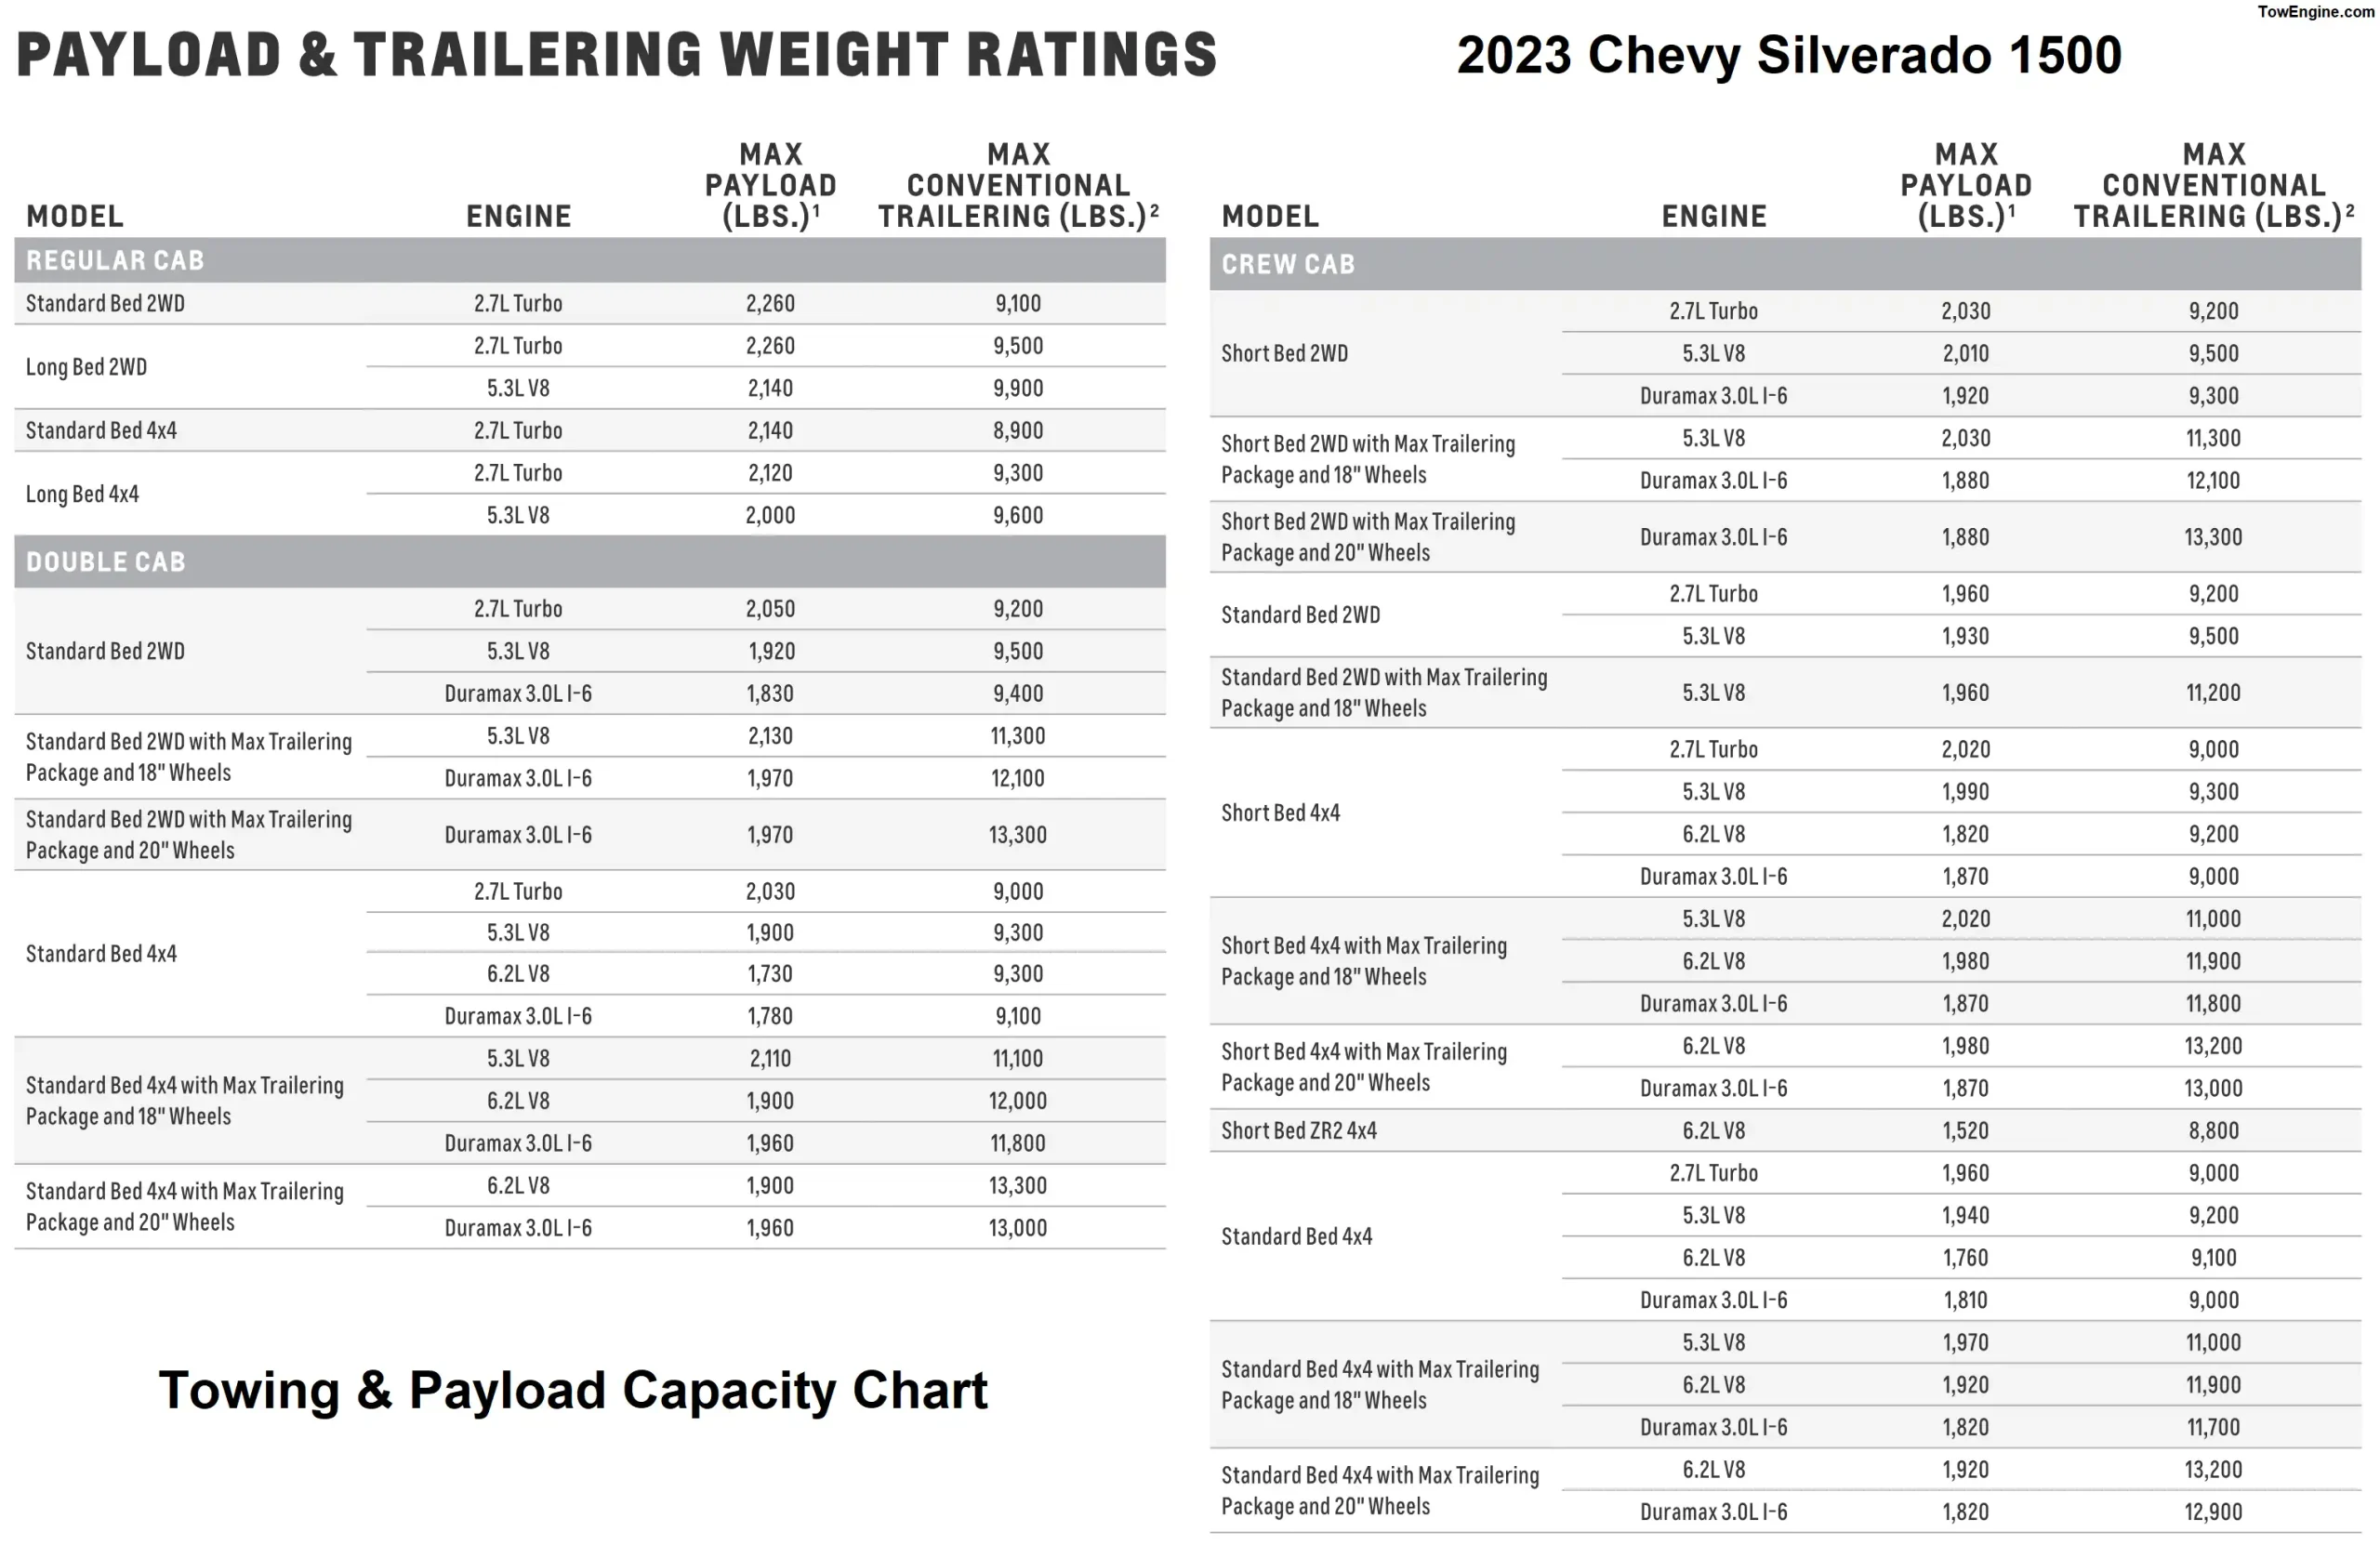 2023 Chevy Chevrolet Silverado 1500 Towing Capacity & Payload Capacity Chart